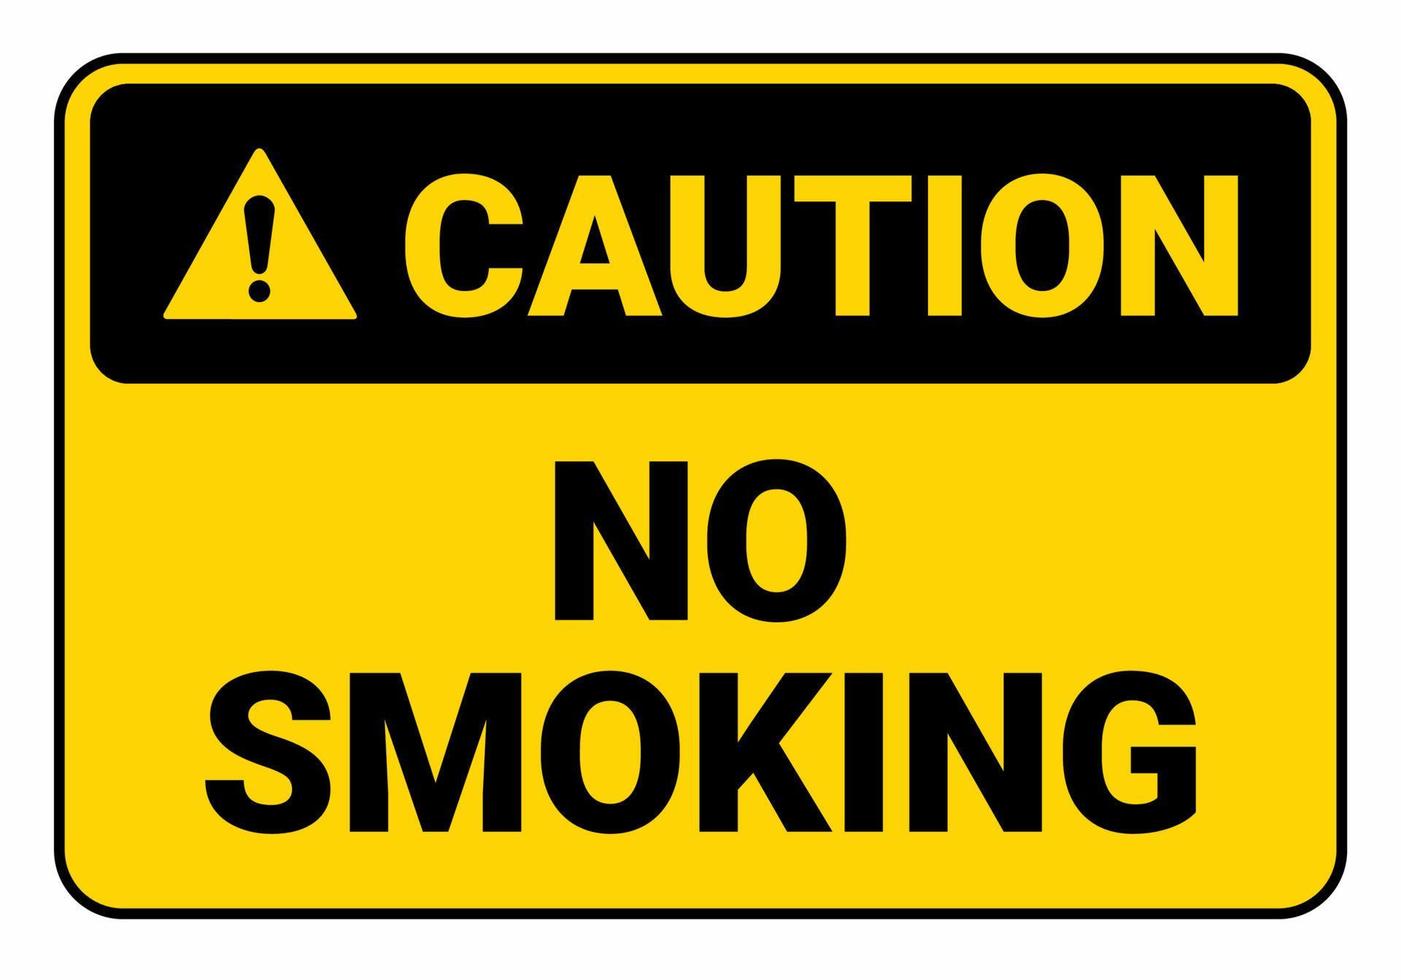 Caution no smoking. Safety sign Vector Illustration. OSHA and ANSI standard sign. eps10